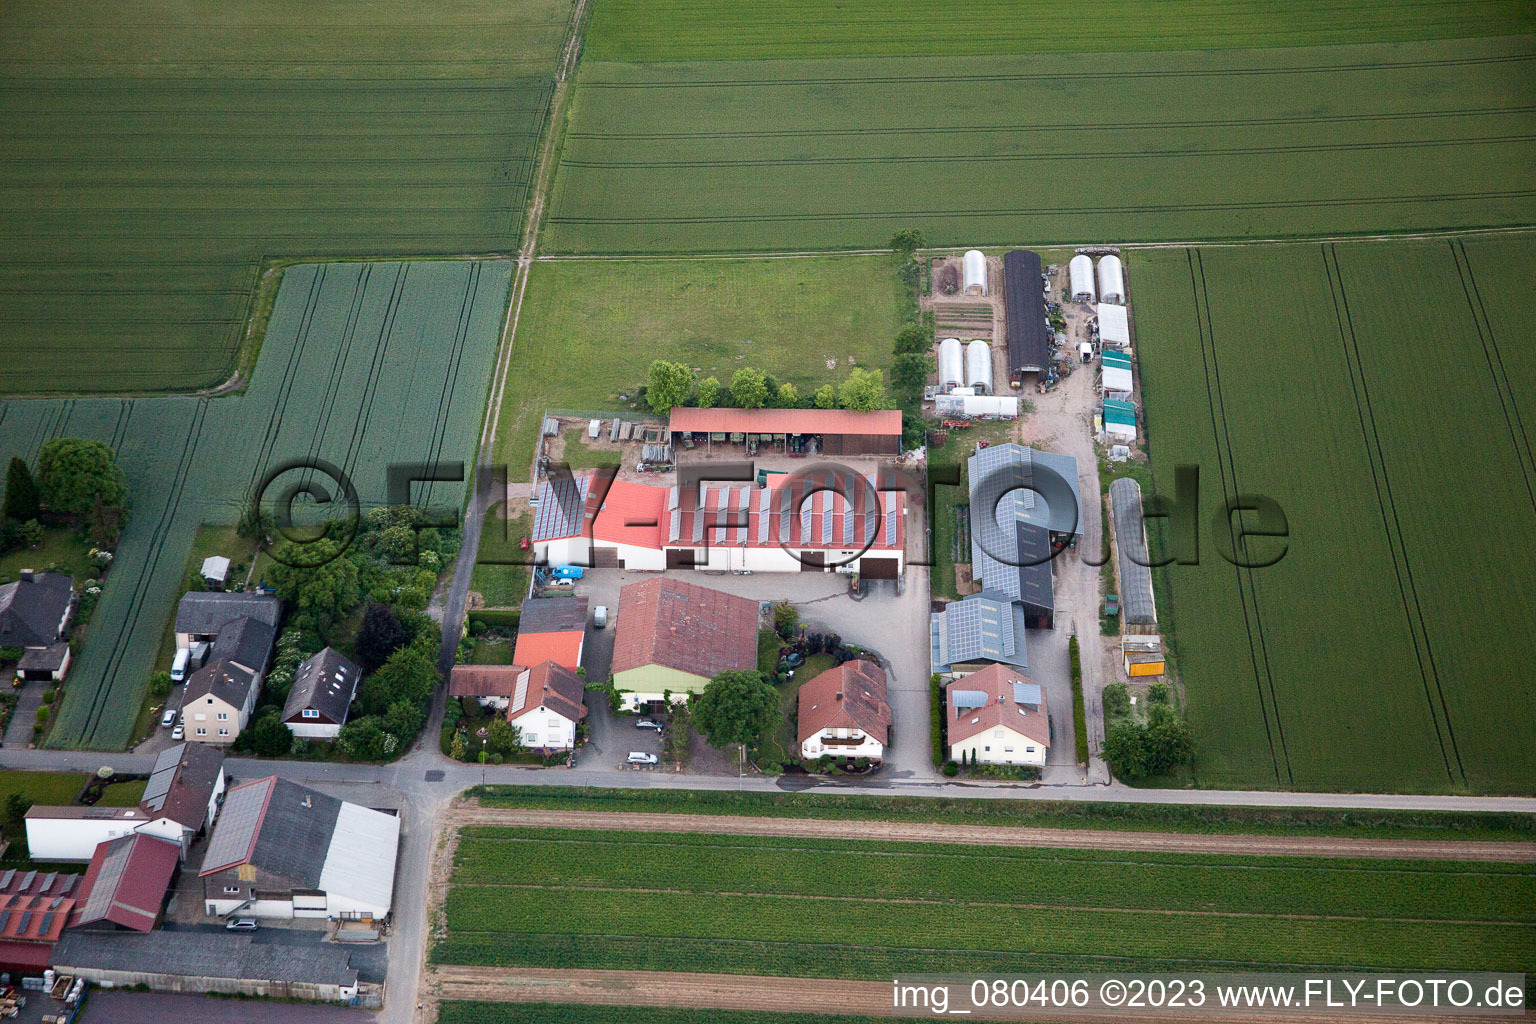 Drone recording of District Herxheim in Herxheim bei Landau/Pfalz in the state Rhineland-Palatinate, Germany